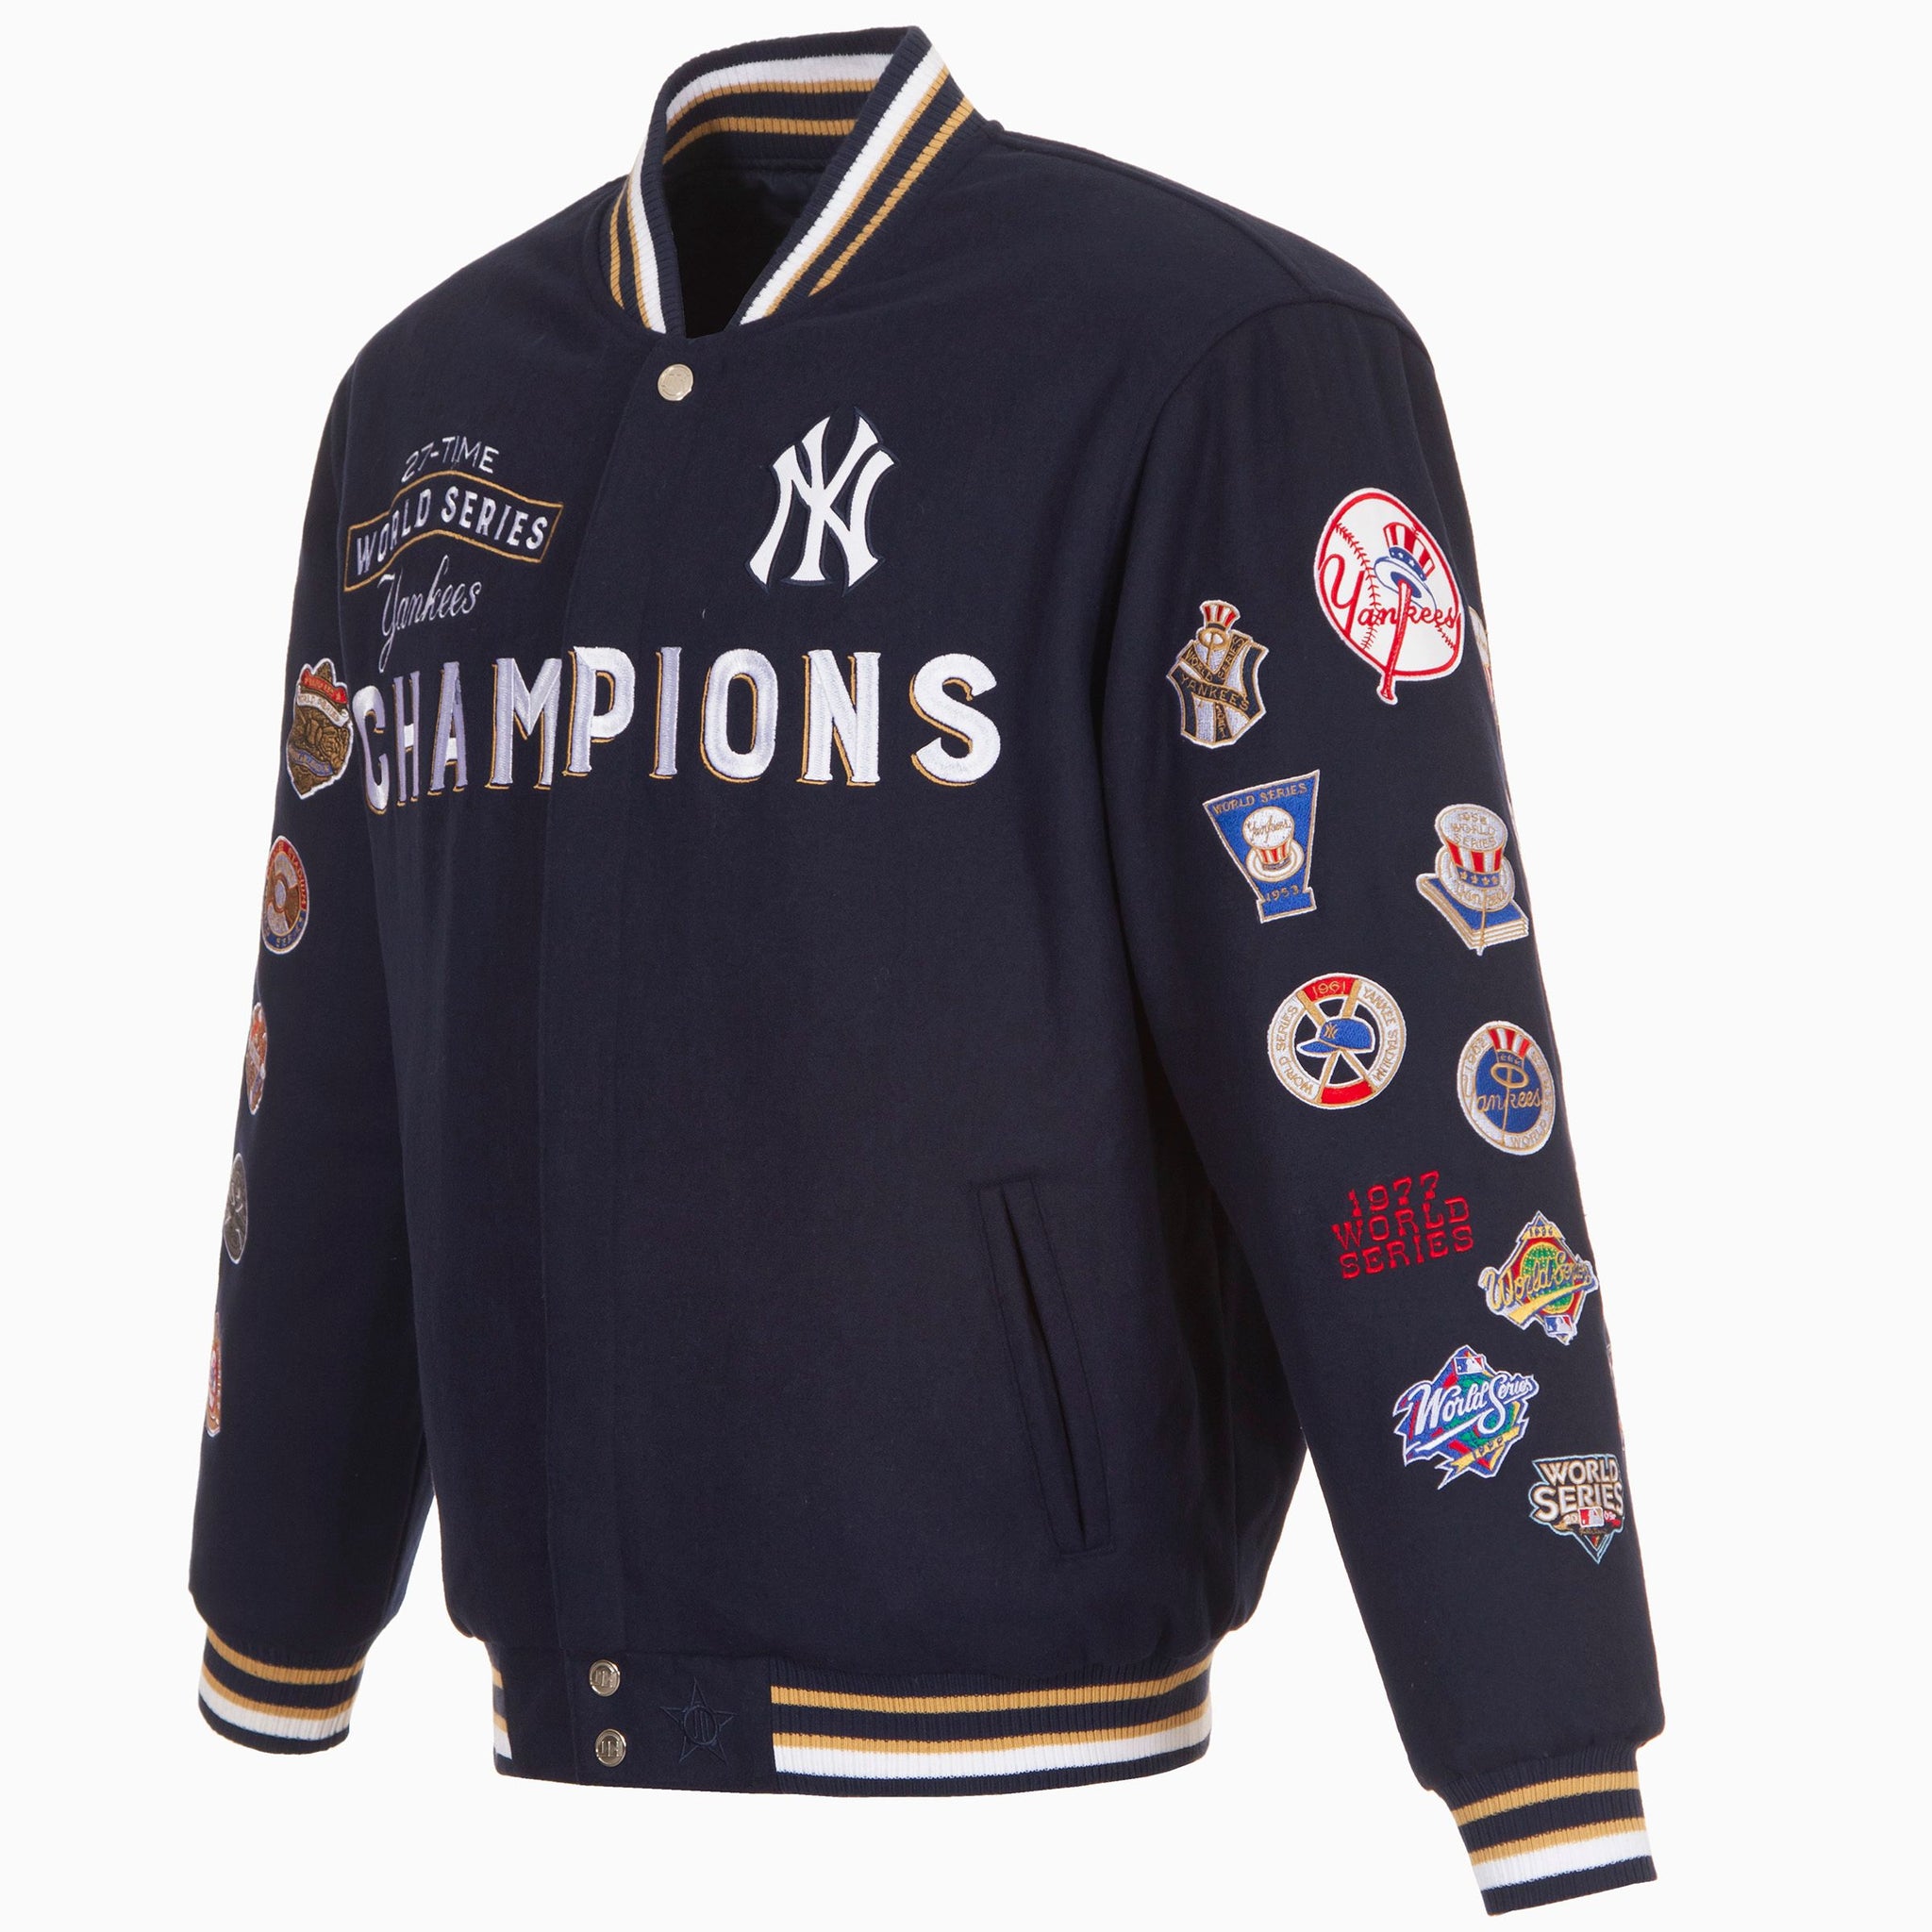 New York Yankees Jacket, Pullover Jacket, Yankees Full-Zip Jackets